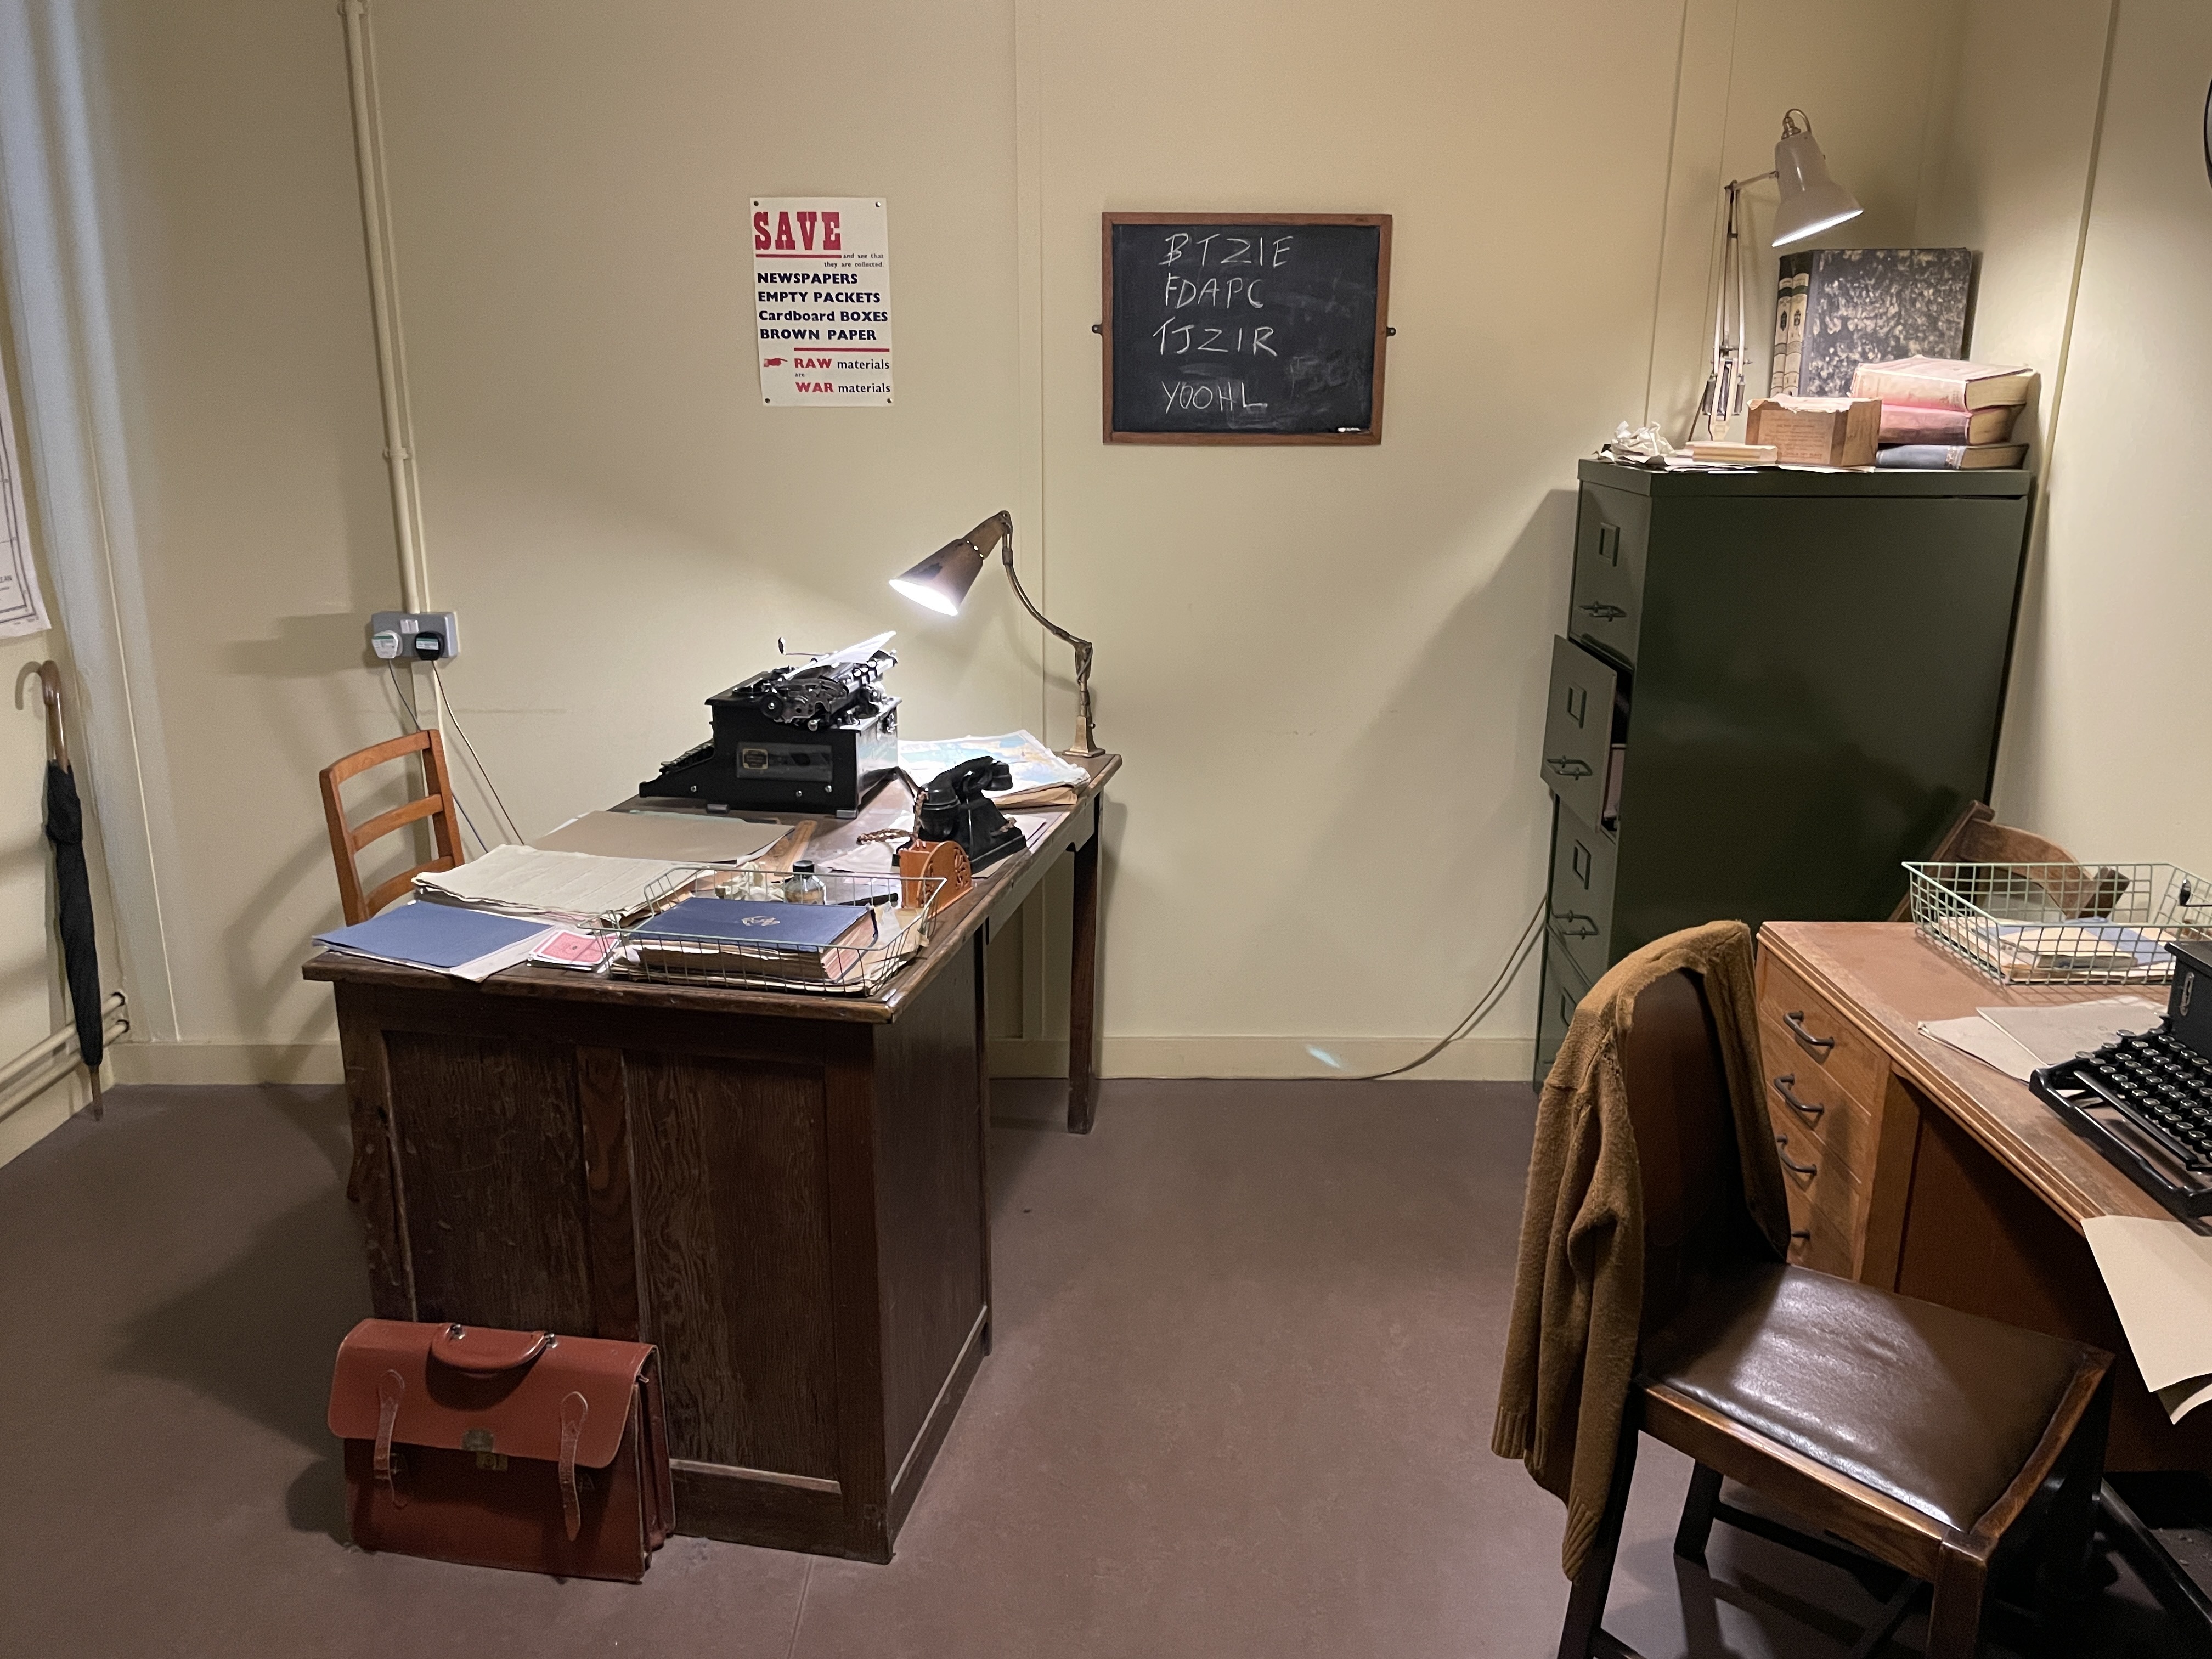 Alan Turing's office in Hut 8